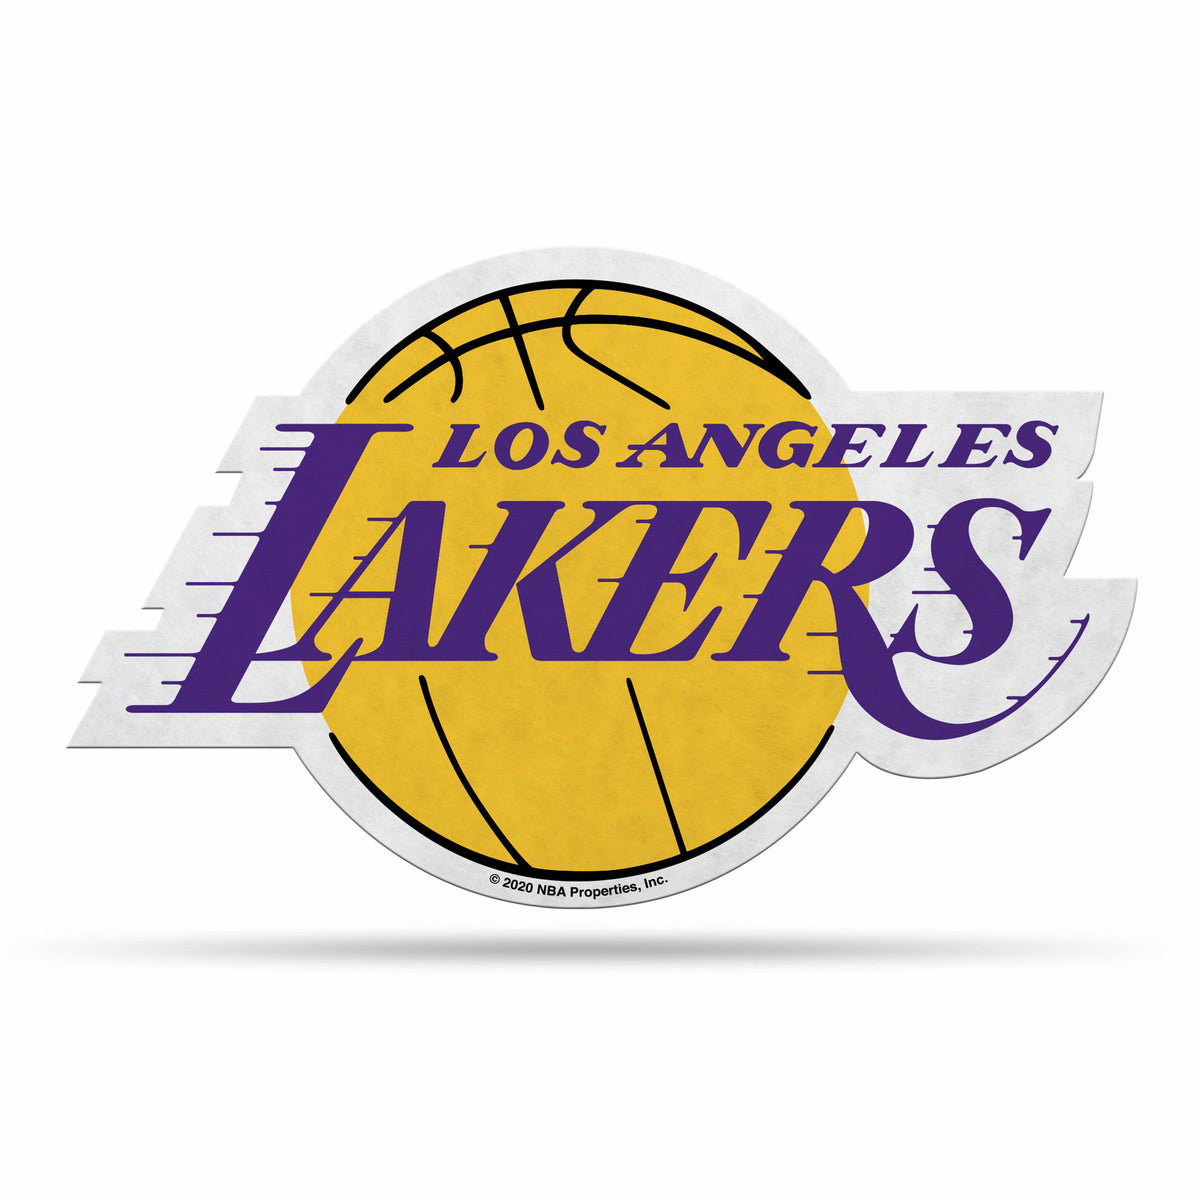 Los Angeles Lakers Pennant Flag